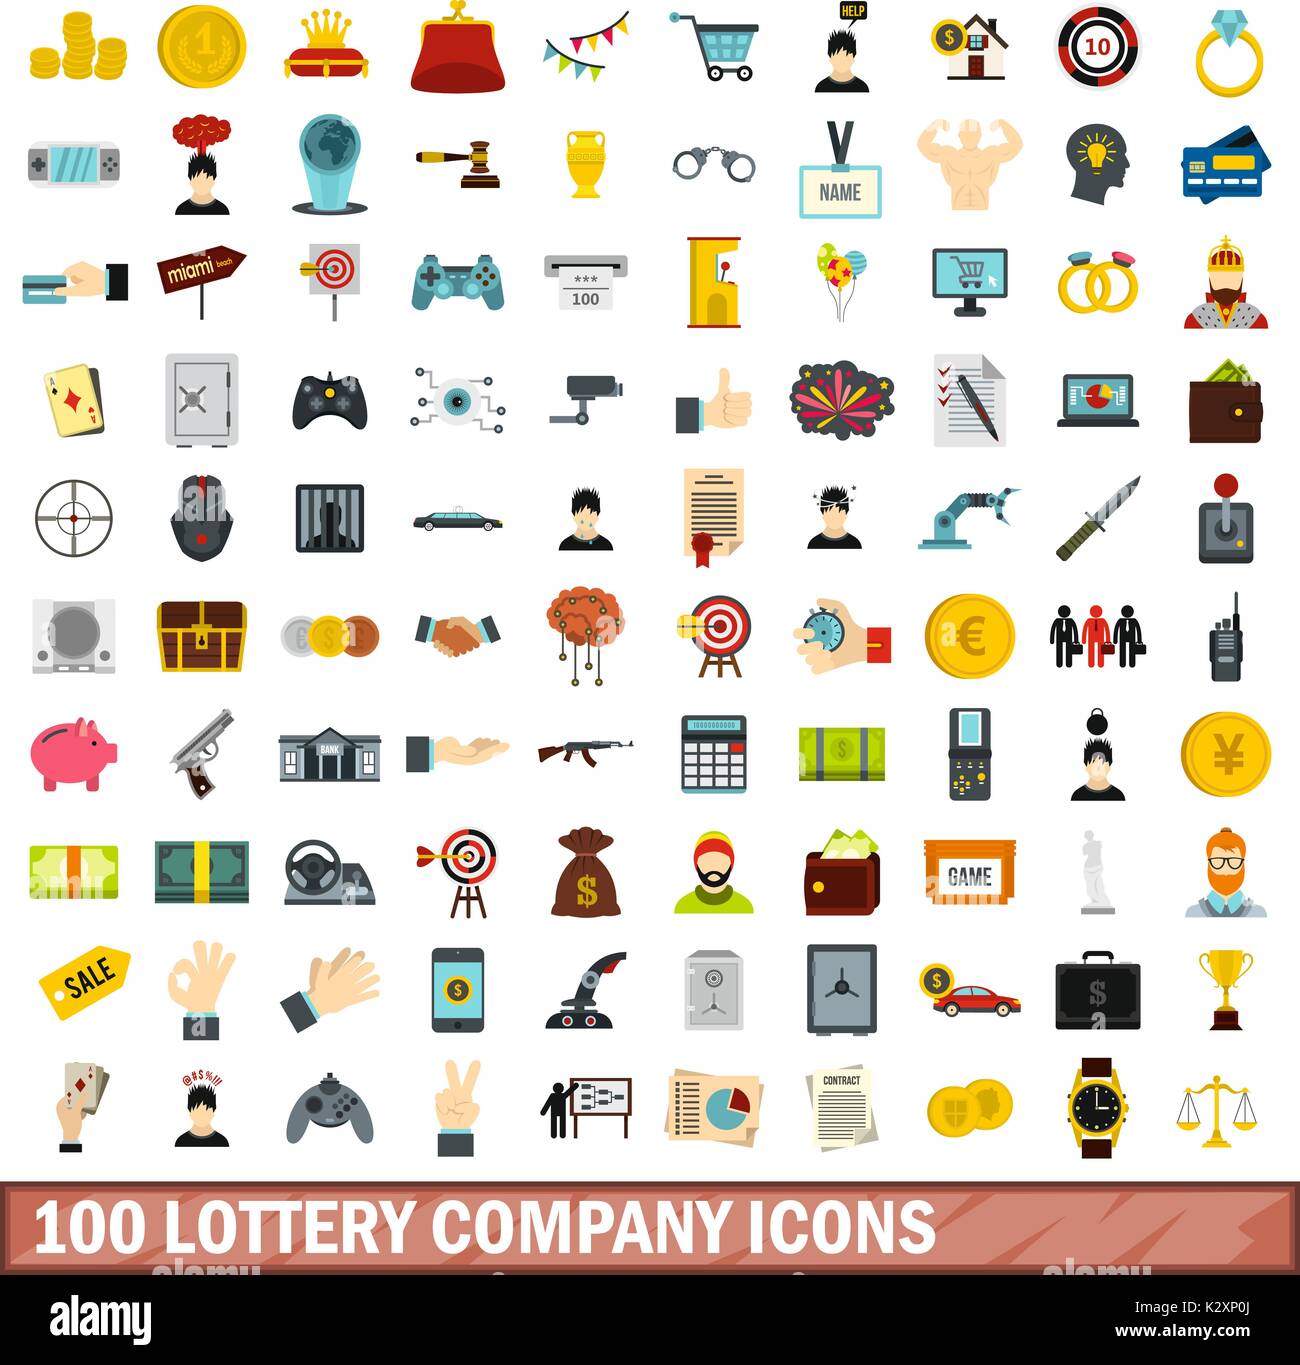 100 lottery company icons set, flat style Stock Vector